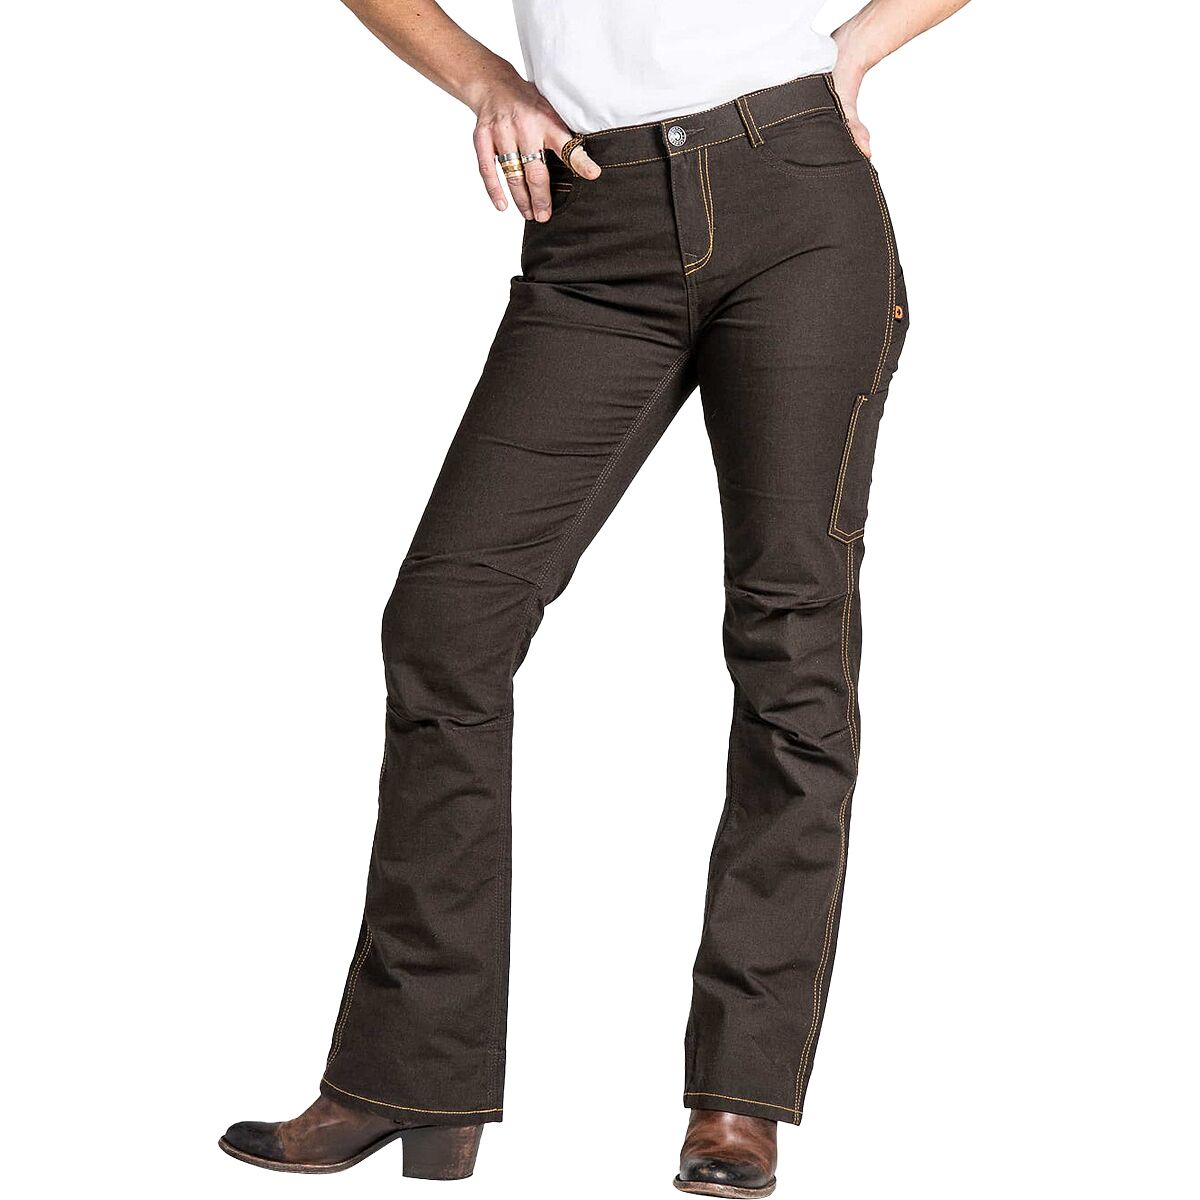 Dovetail Workwear DX Bootcut Pant - Women's